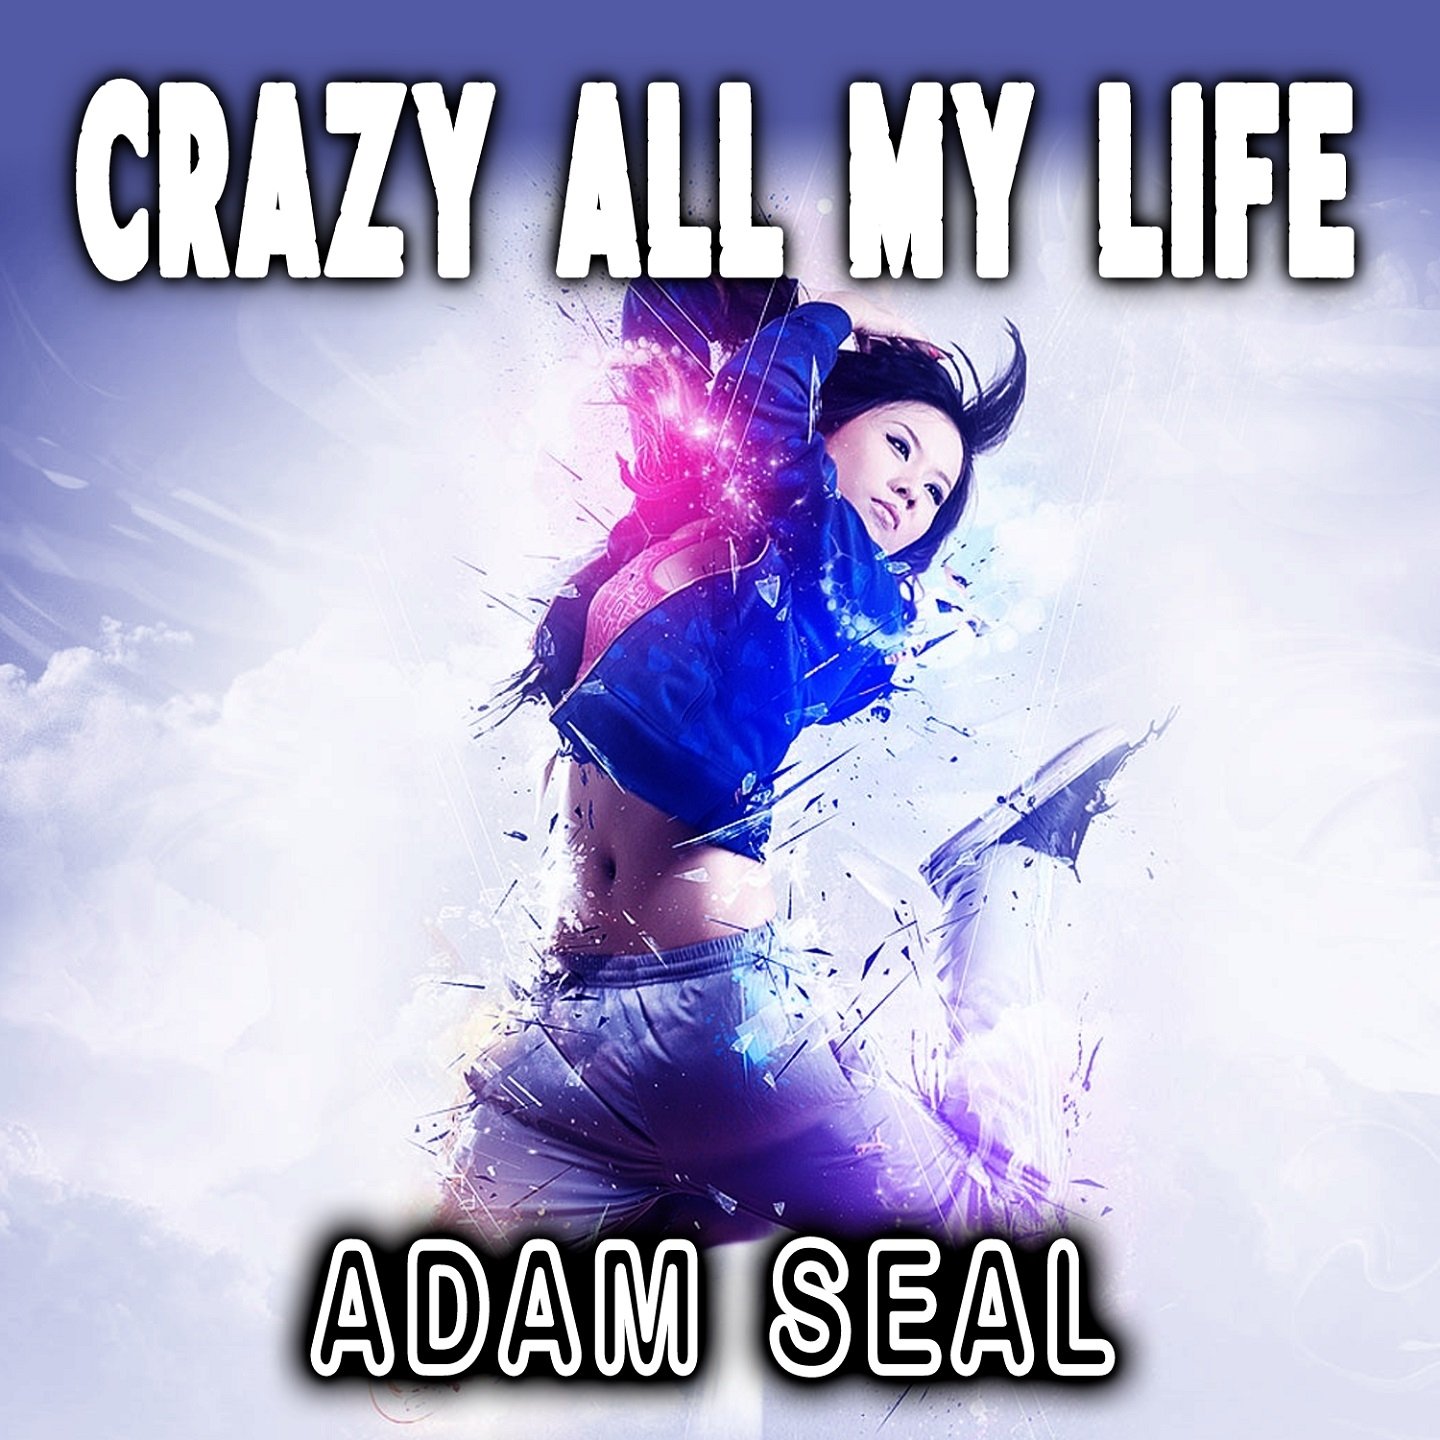 Трек my life. Crazy all my Life. Daniel Powter Crazy all my Life. Crazy on my Life. All my Life трек.